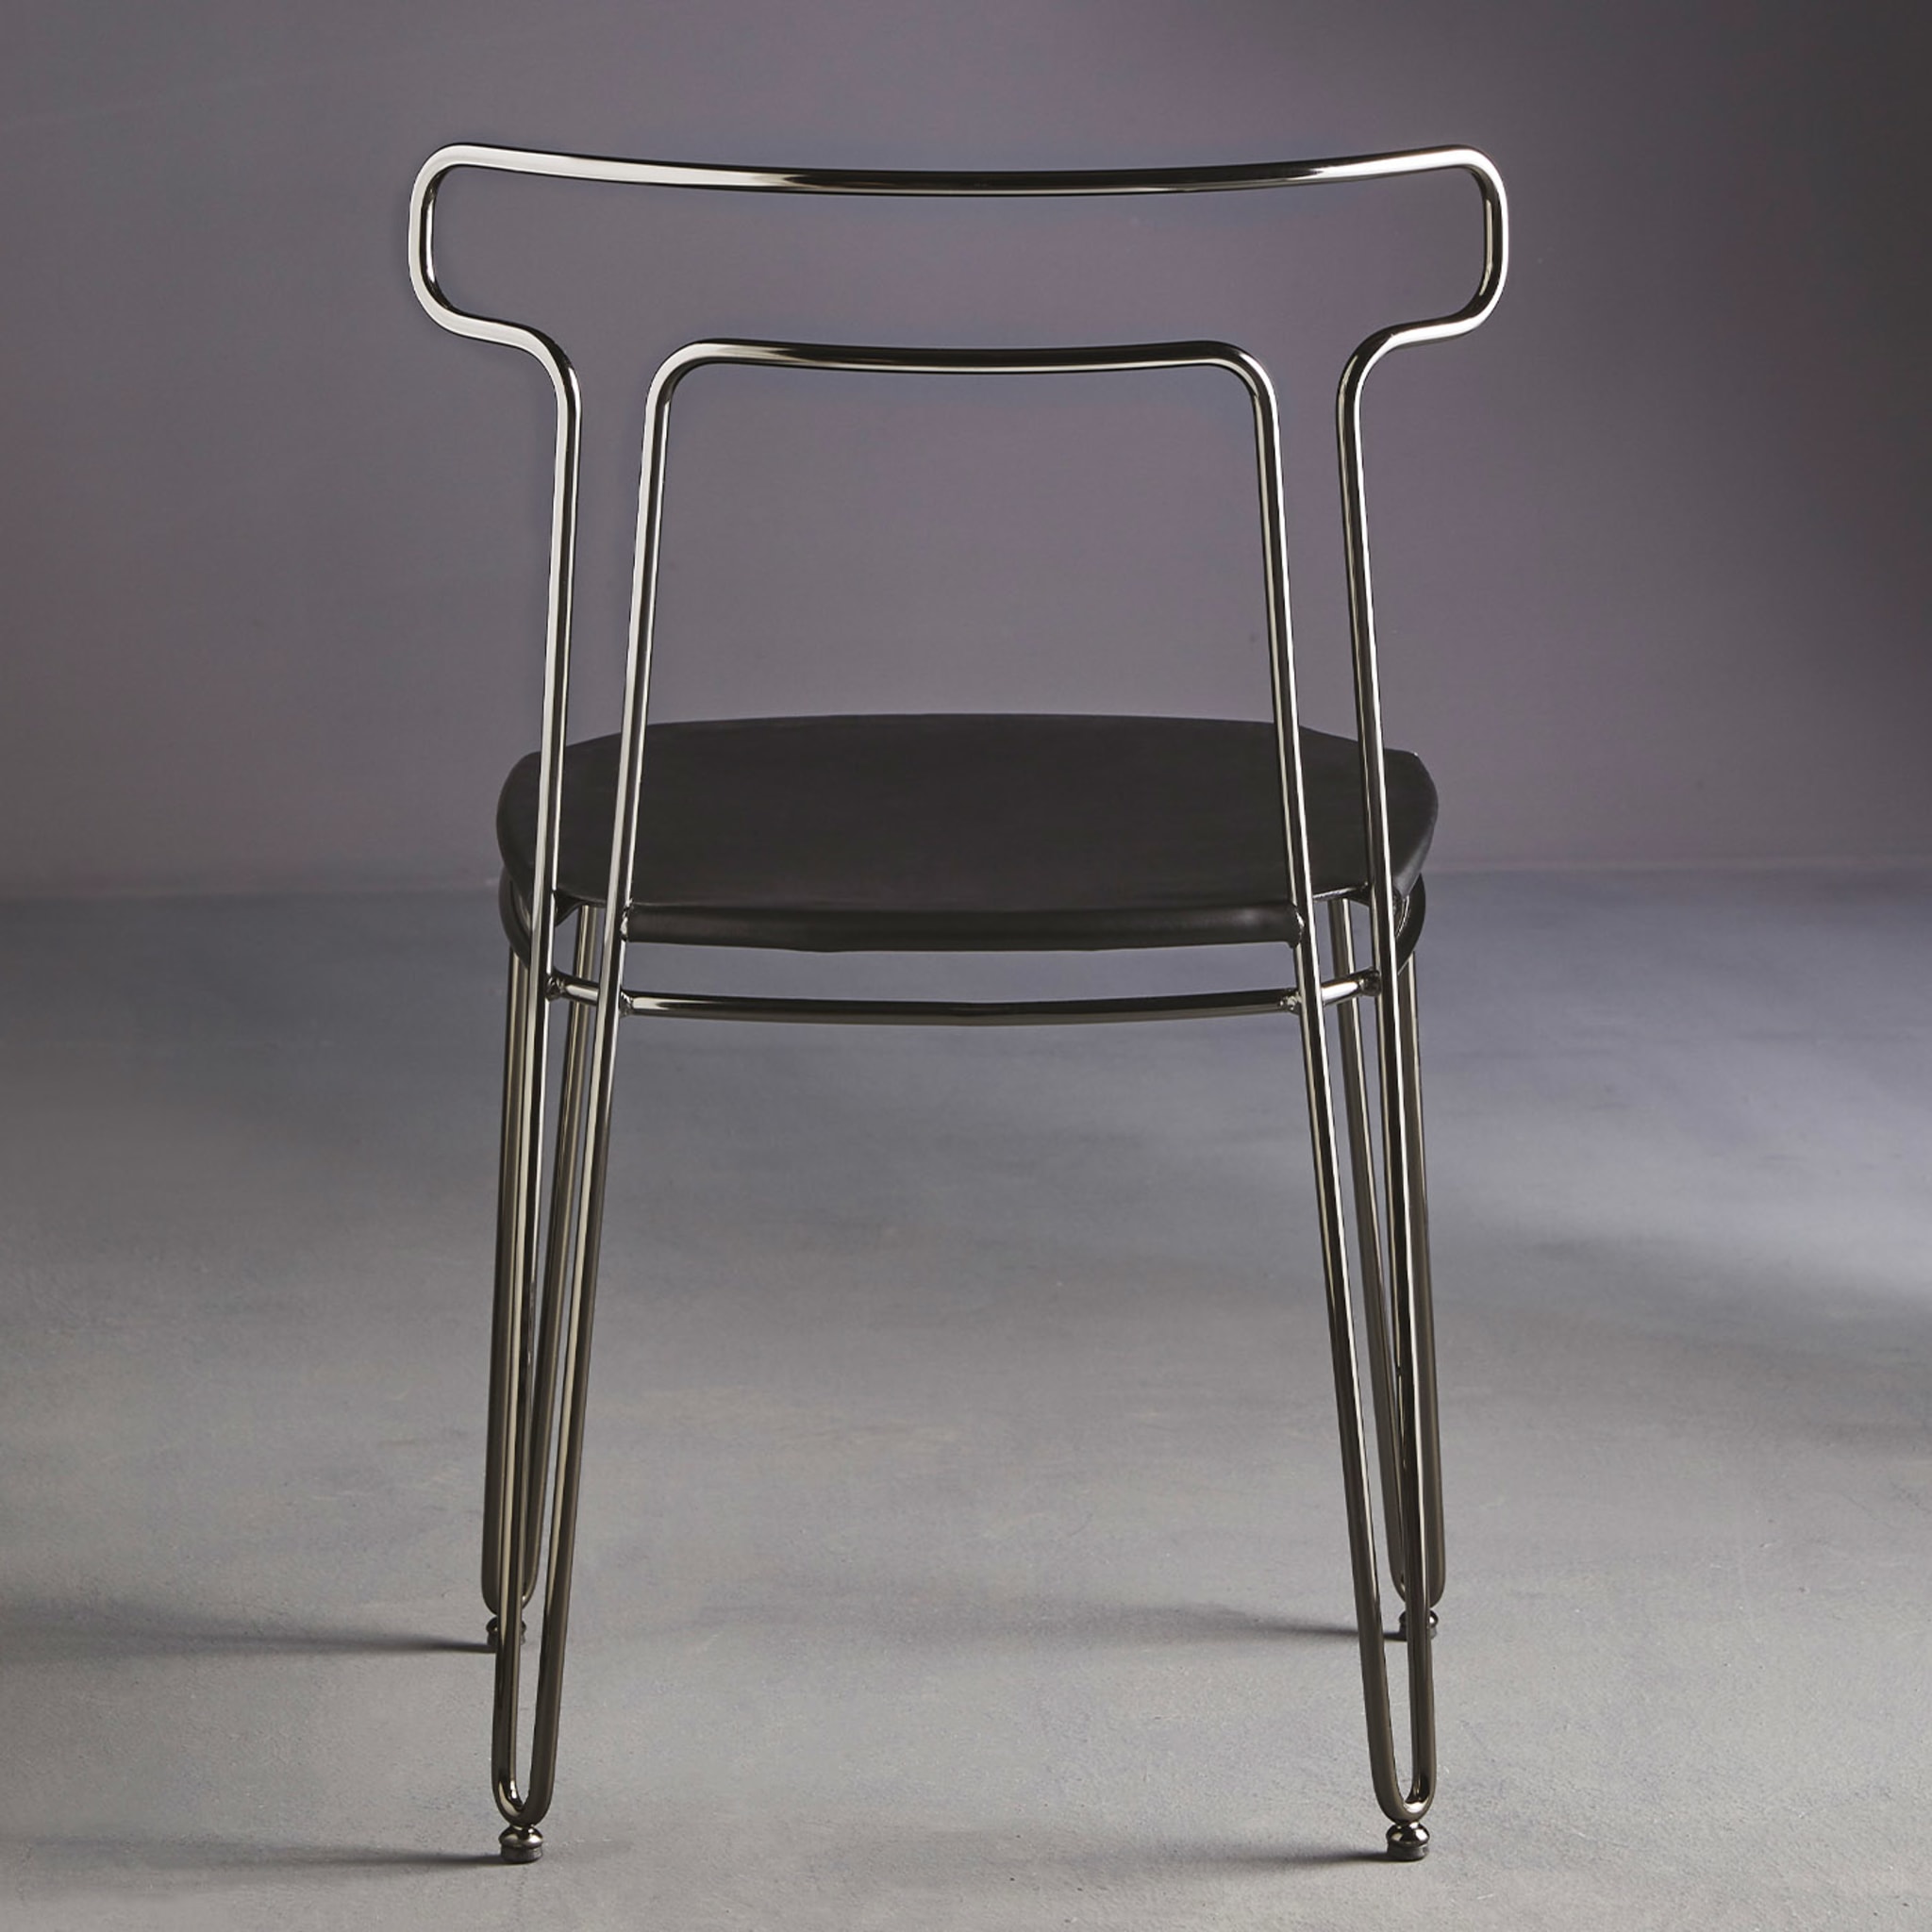 Jackie Black Chair by S. Grassi - Alternative view 1